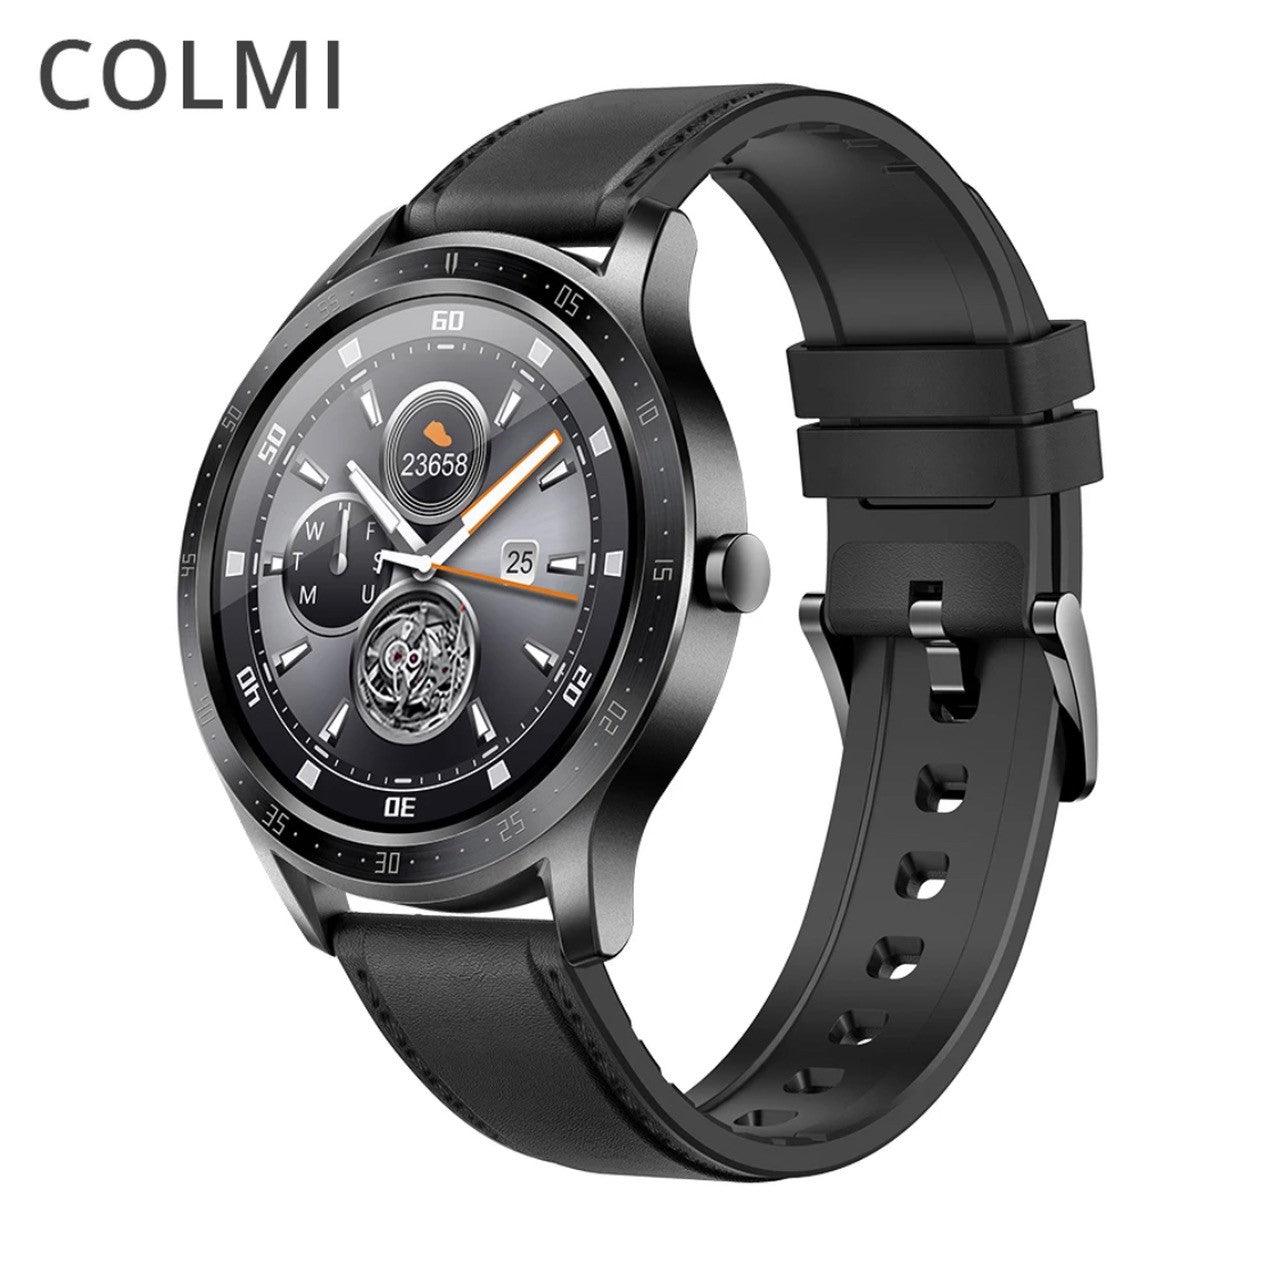 Colmi Sky 5 Black-Smart Watch South Africa 